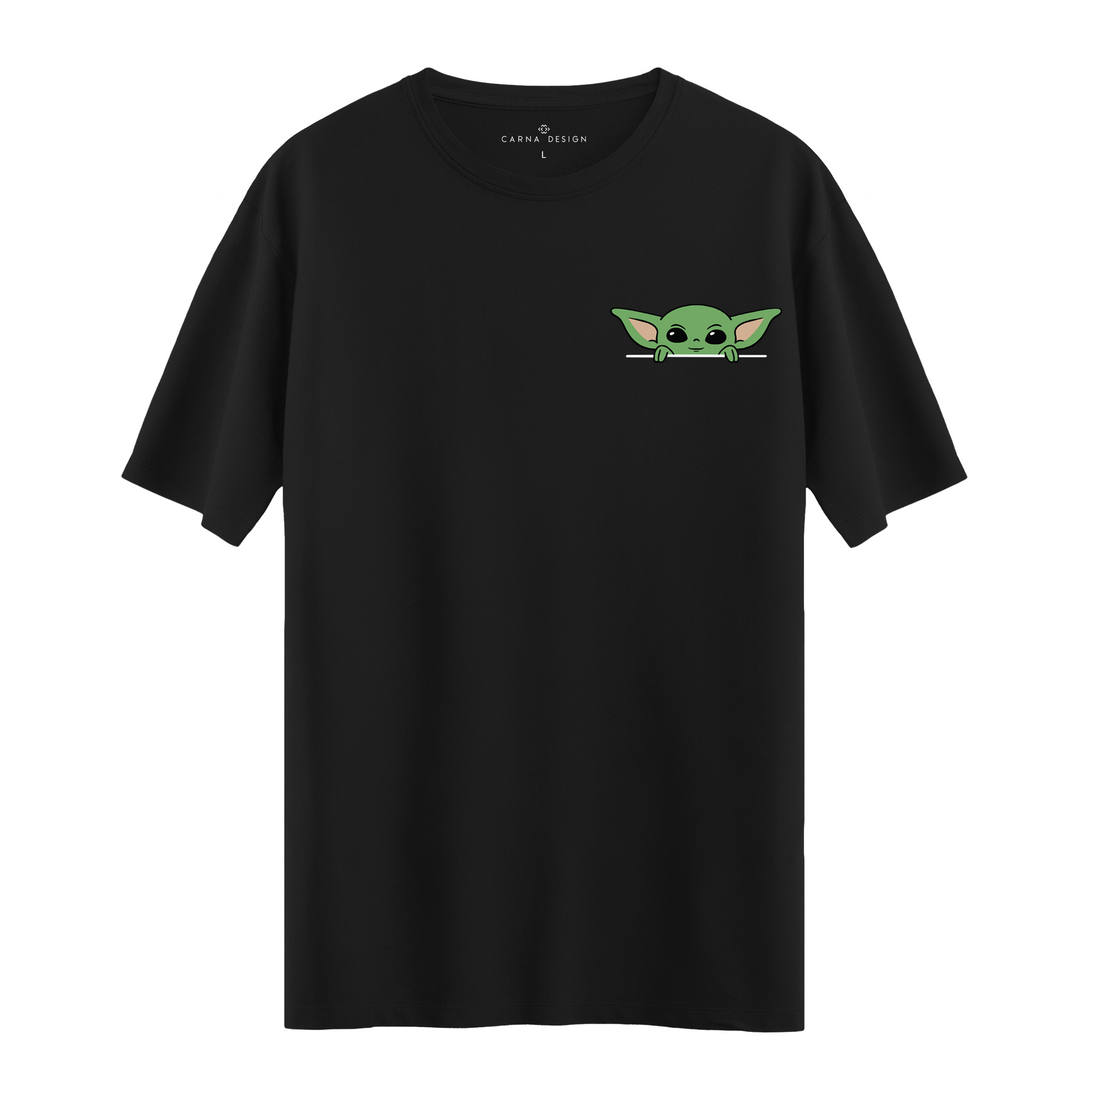 Baby Yoda - Oversize T-shirt